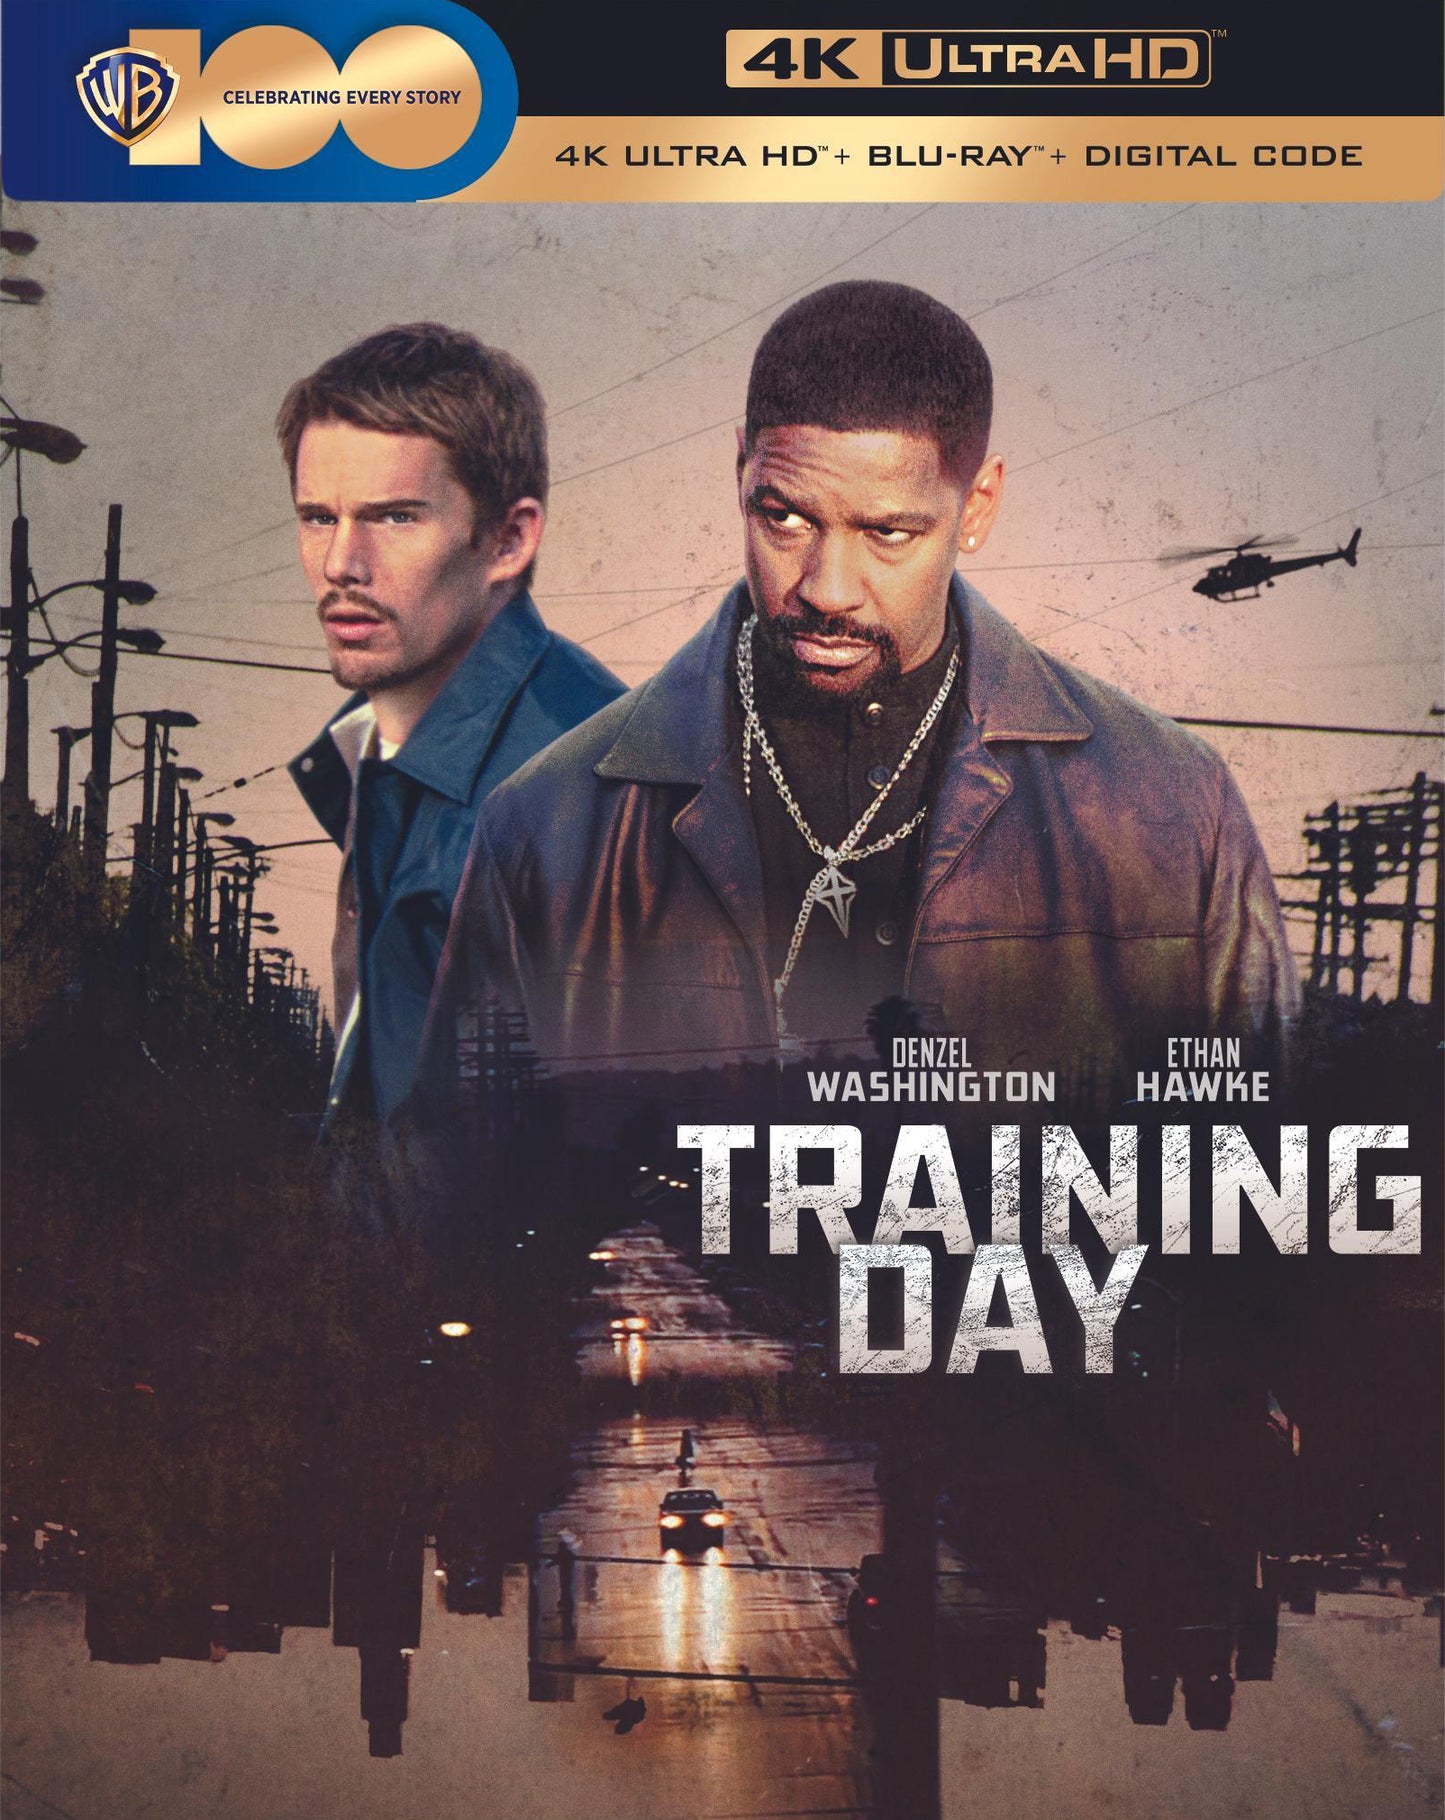 Training Day [Includes Digital Copy] [4K Ultra HD Blu-ray/Blu-ray] cover art